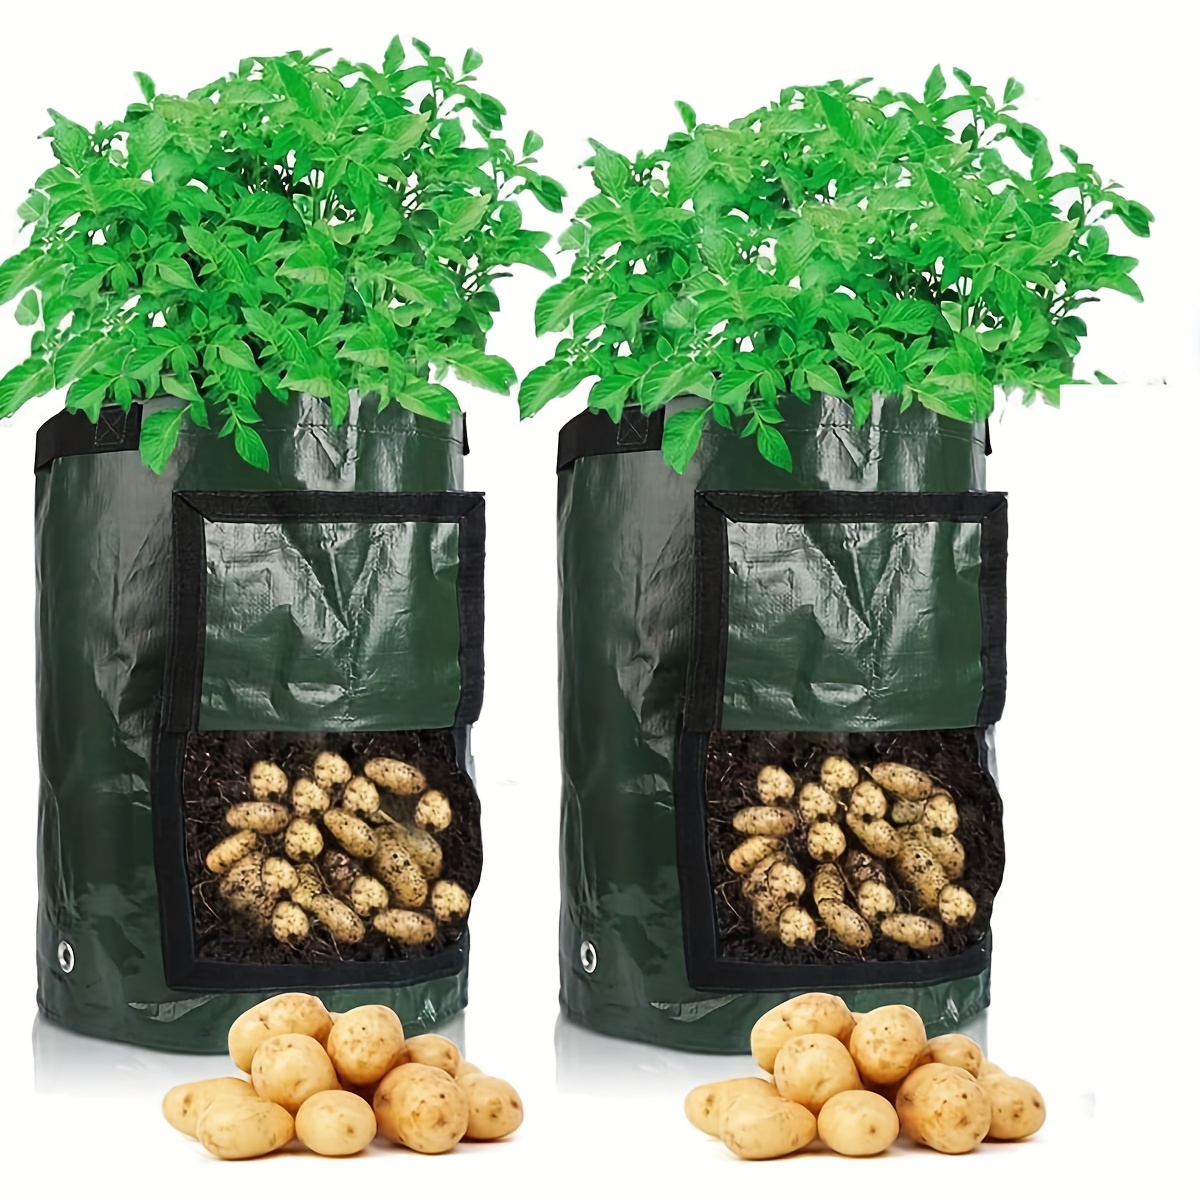 

2-piece Green Potato Grow Bags With Handles & Petals - Versatile Sizes For Onions, Fruits, Tomatoes, Carrots - Indoor/outdoor Garden Planters